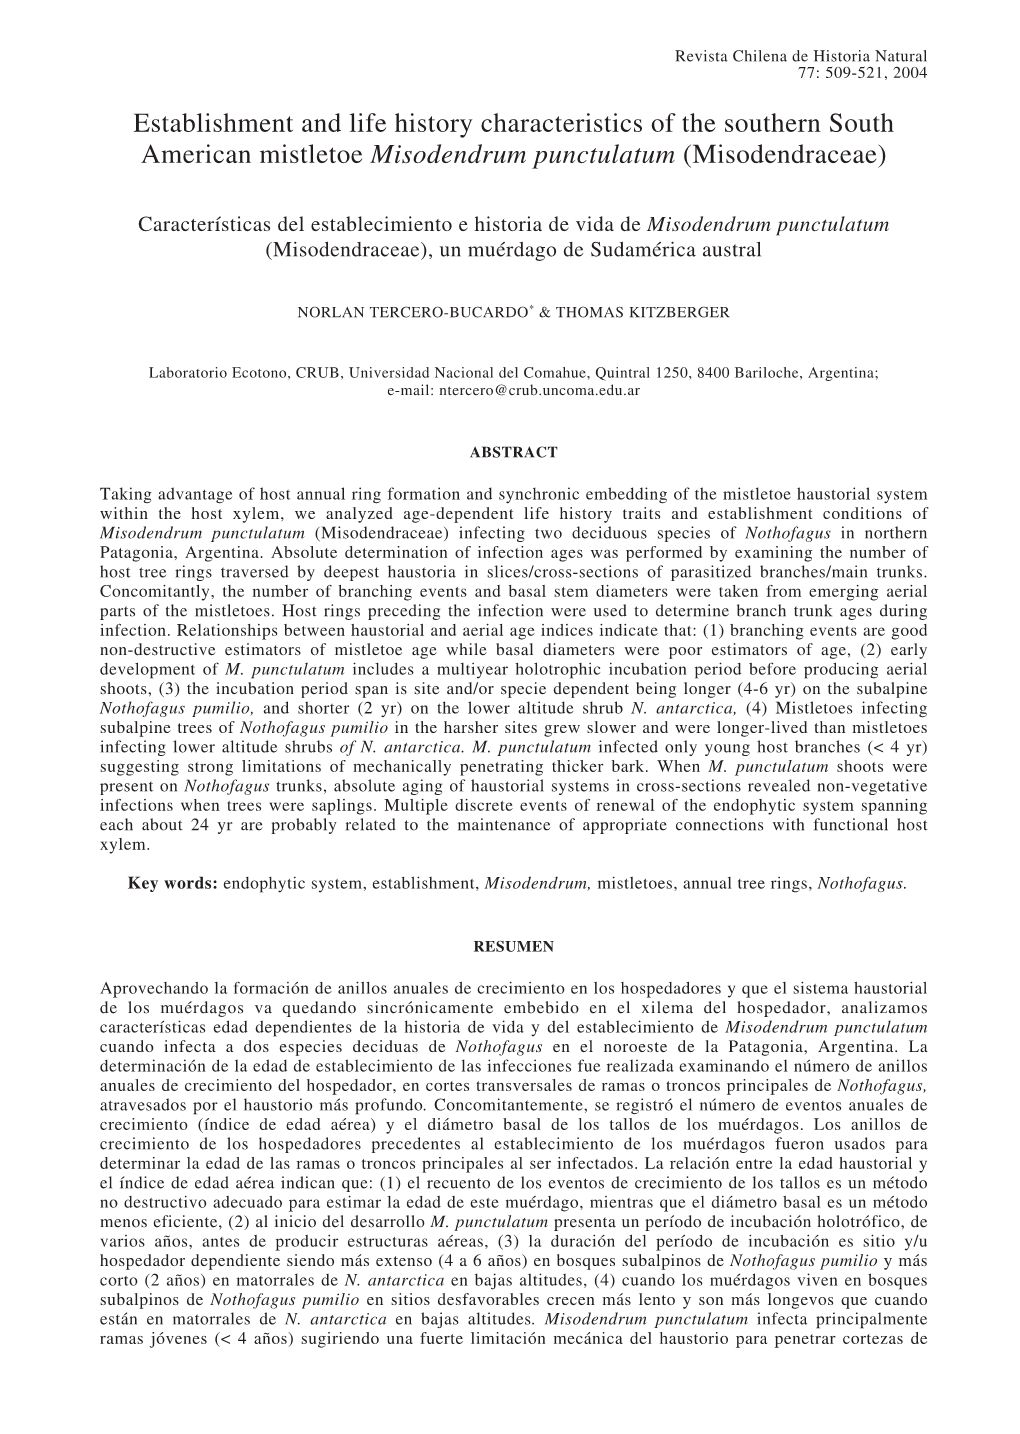 Establishment and Life History Characteristics of the Southern South American Mistletoe Misodendrum Punctulatum (Misodendraceae)